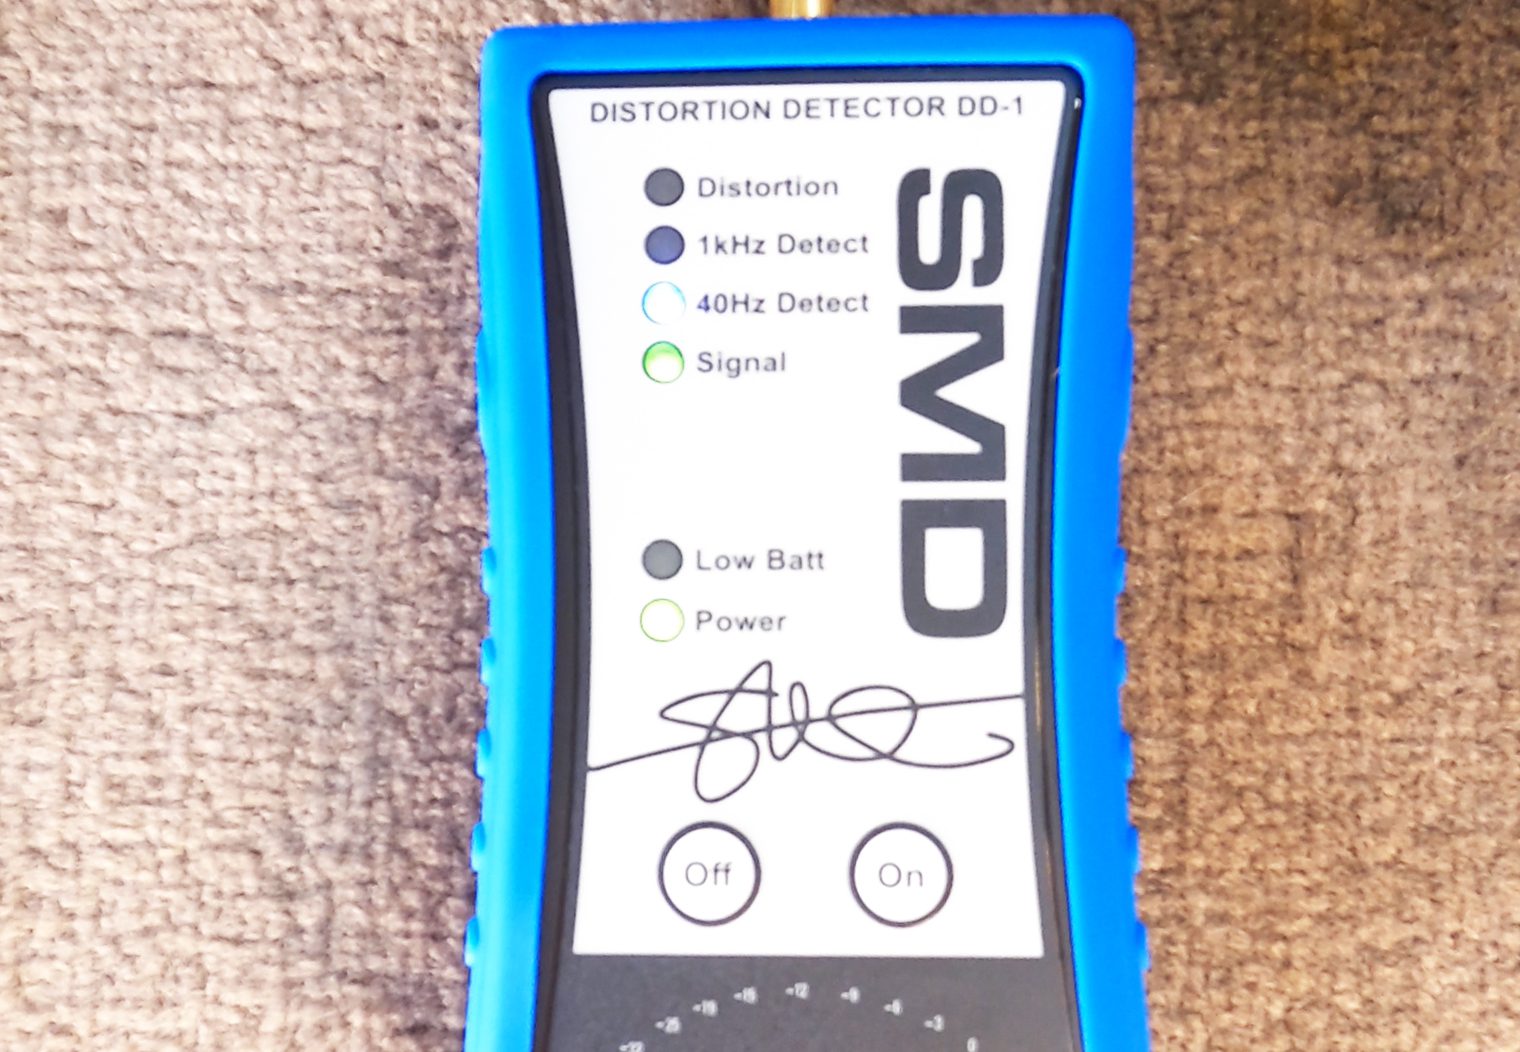 SMD DD-1 distortion detector no distortion